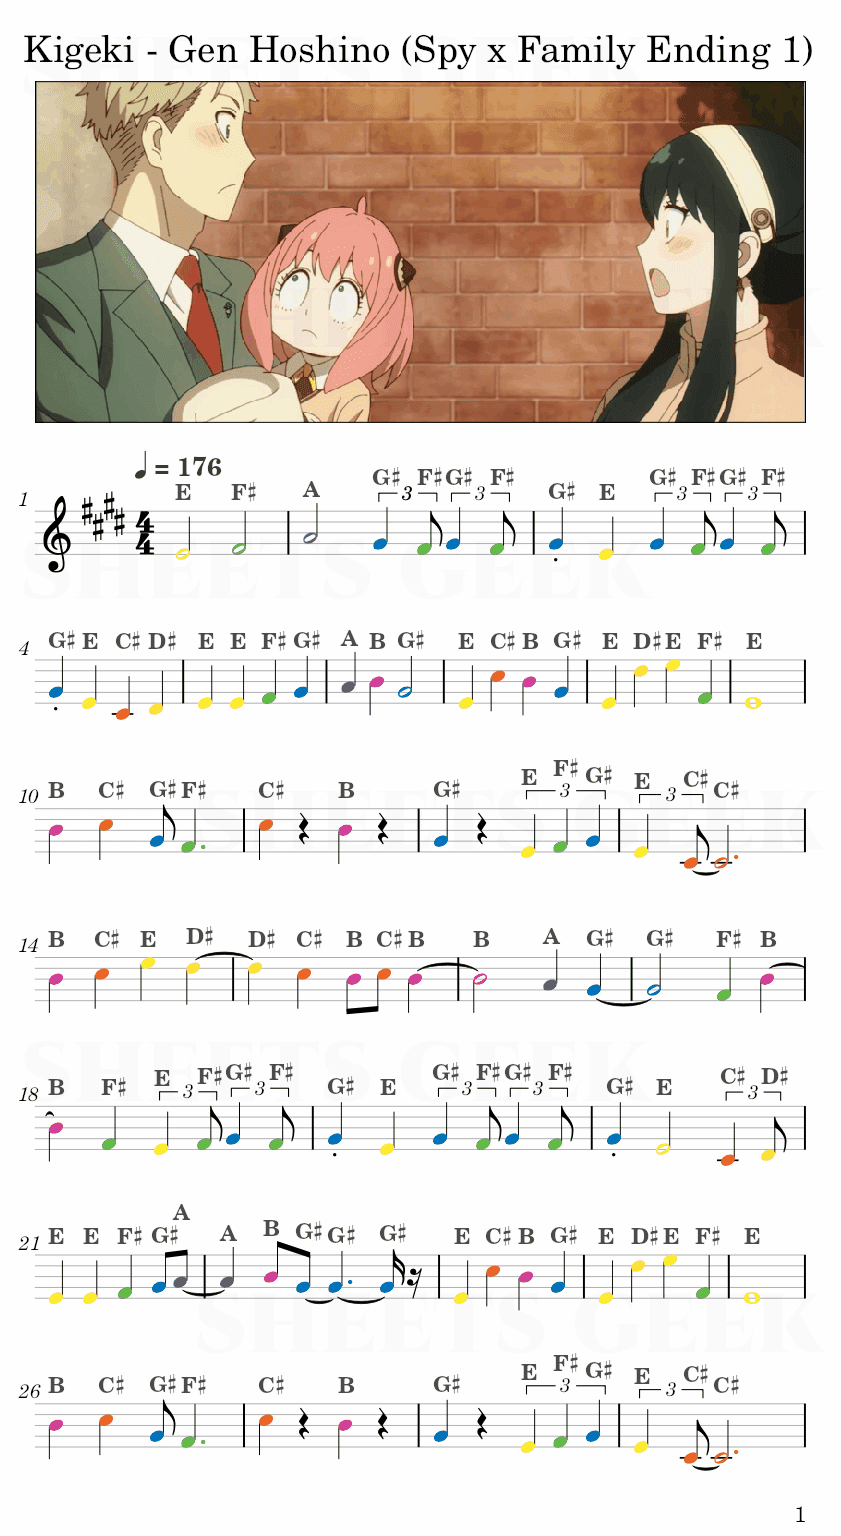 Kigeki - Gen Hoshino (Spy x Family Ending 1) Easy Sheet Music Free for piano, keyboard, flute, violin, sax, cello page 1